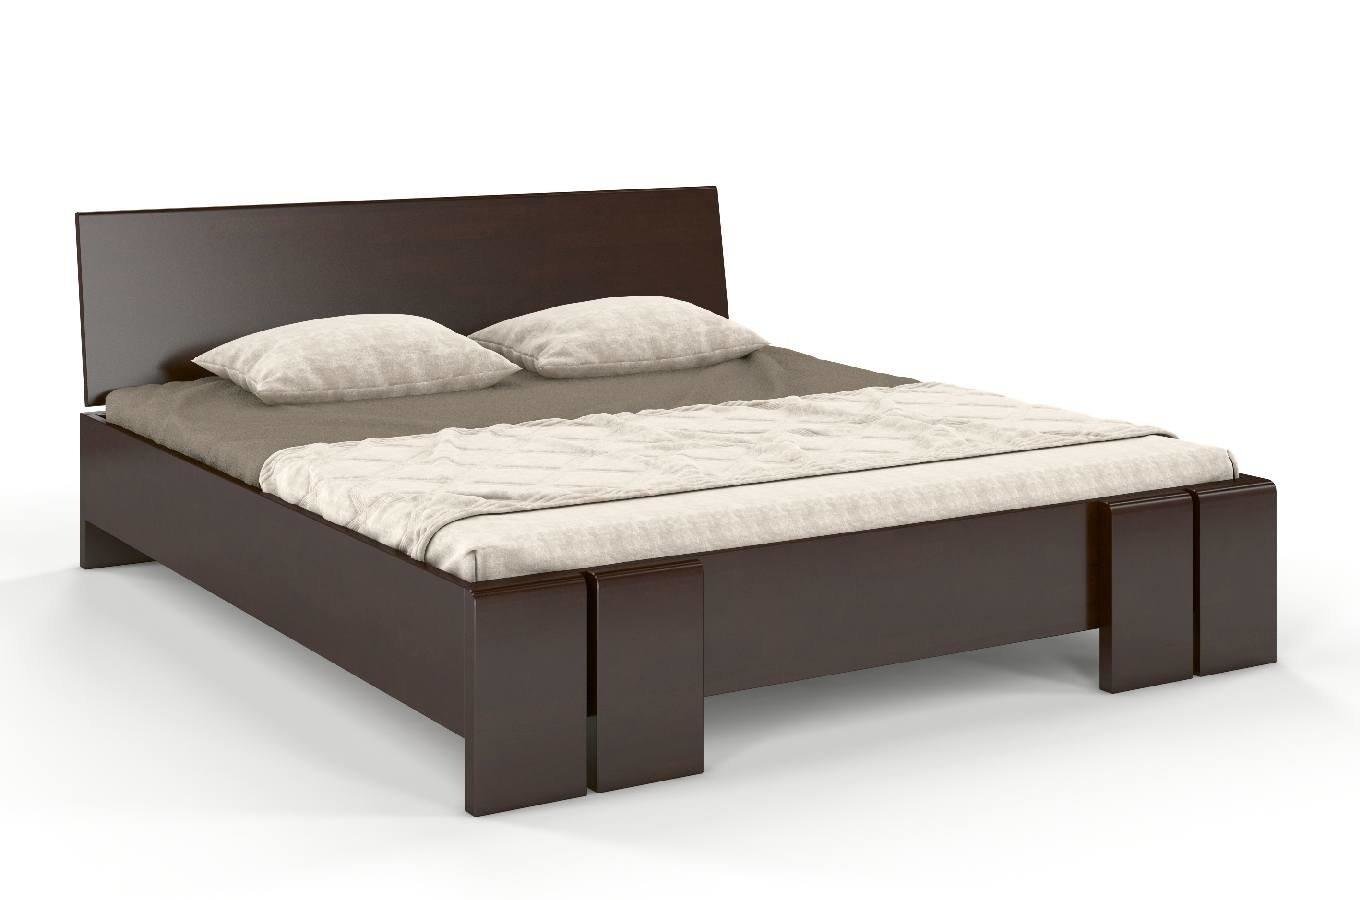 Łóżko drewniane bukowe Skandica VESTRE Maxi / 180x200 cm, kolor palisander